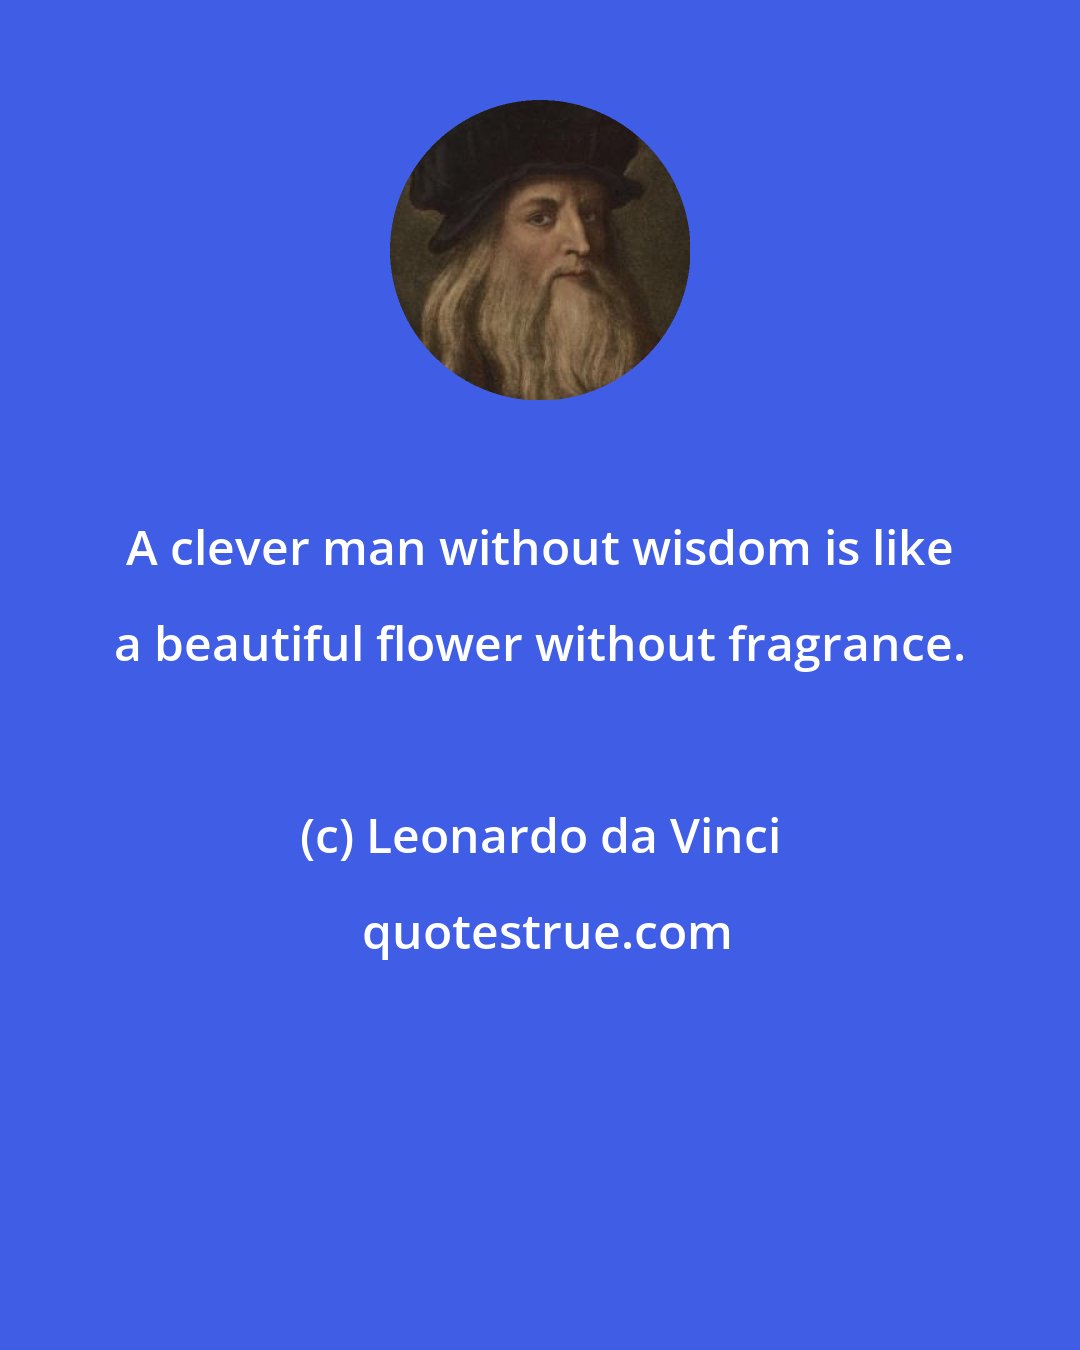 Leonardo da Vinci: A clever man without wisdom is like a beautiful flower without fragrance.